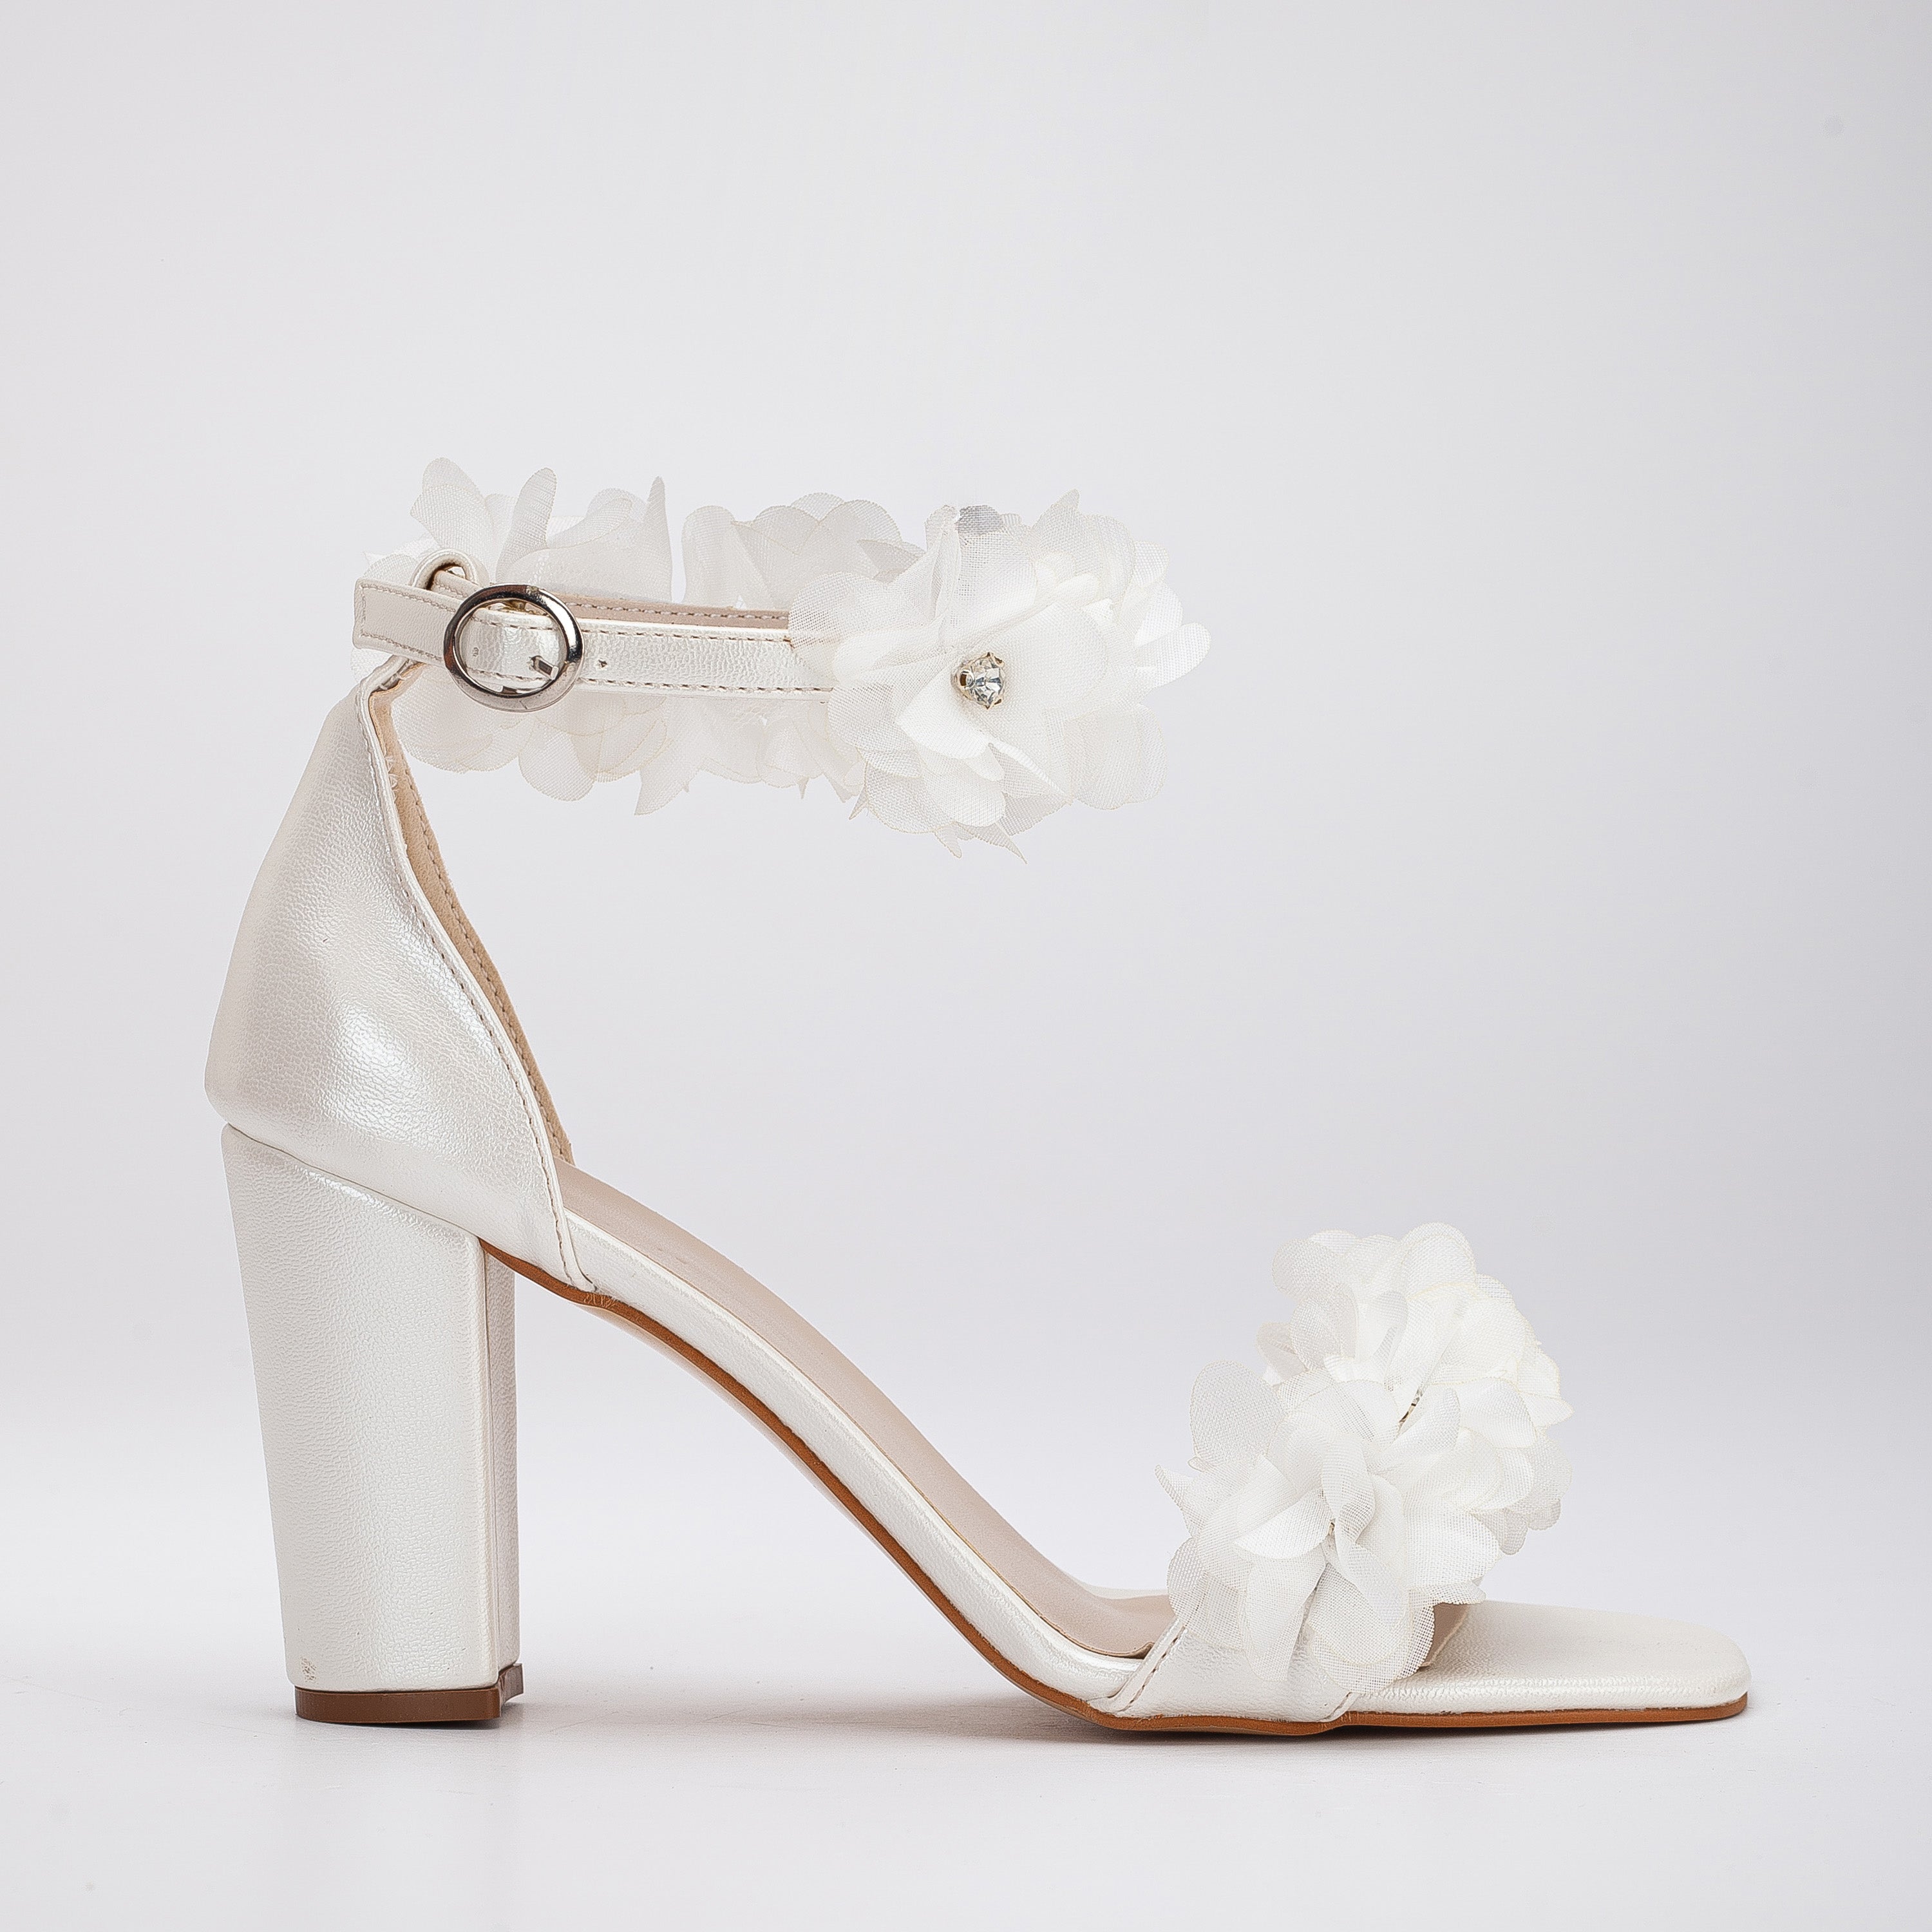 Lace Wedding Shoes, White Heels, White Bride Shoes, Wedding Shoes, White High Heel Shoes